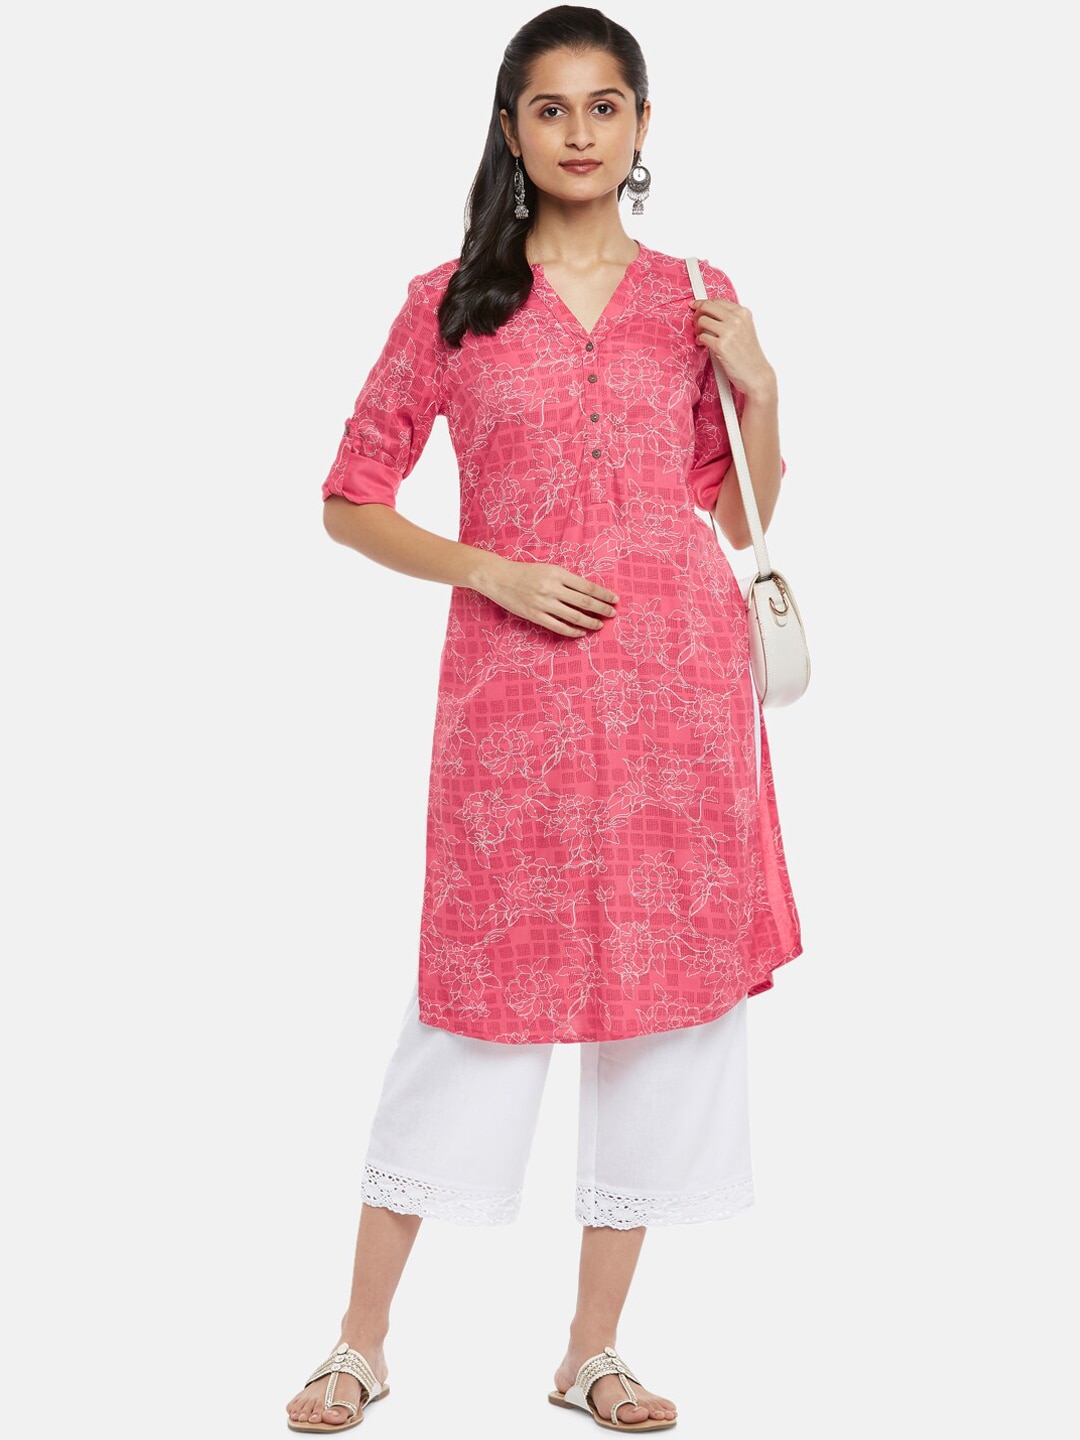 RANGMANCH BY PANTALOONS Women Pink Ethnic Motifs Checked Kurta Price in India